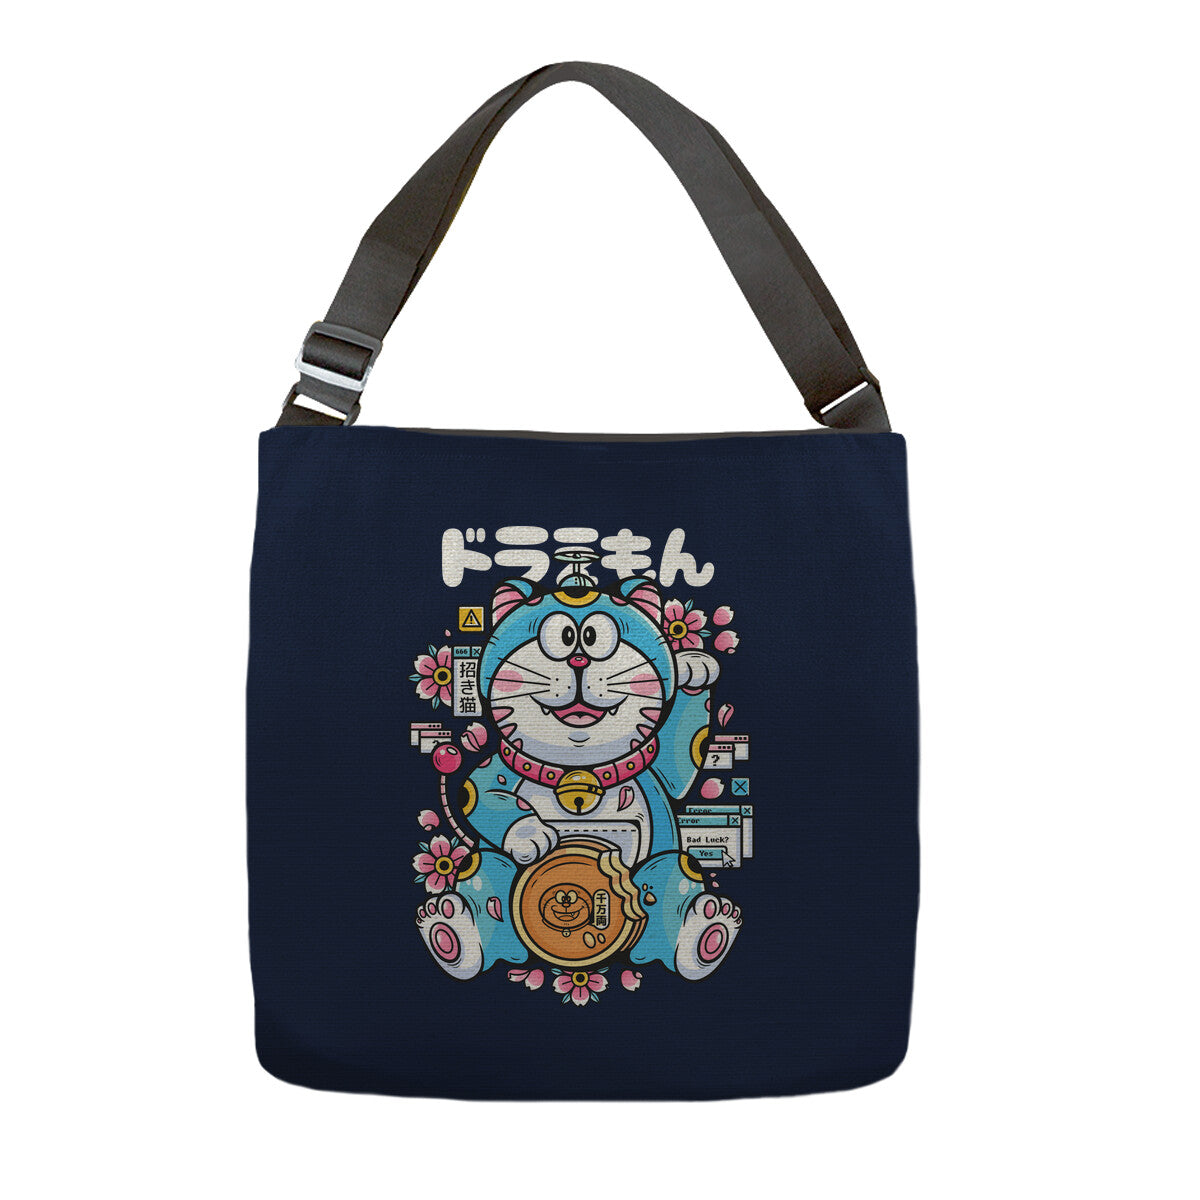 Doraemon Canvas Tote Bag Anywhere door Hapitas from Japan | eBay